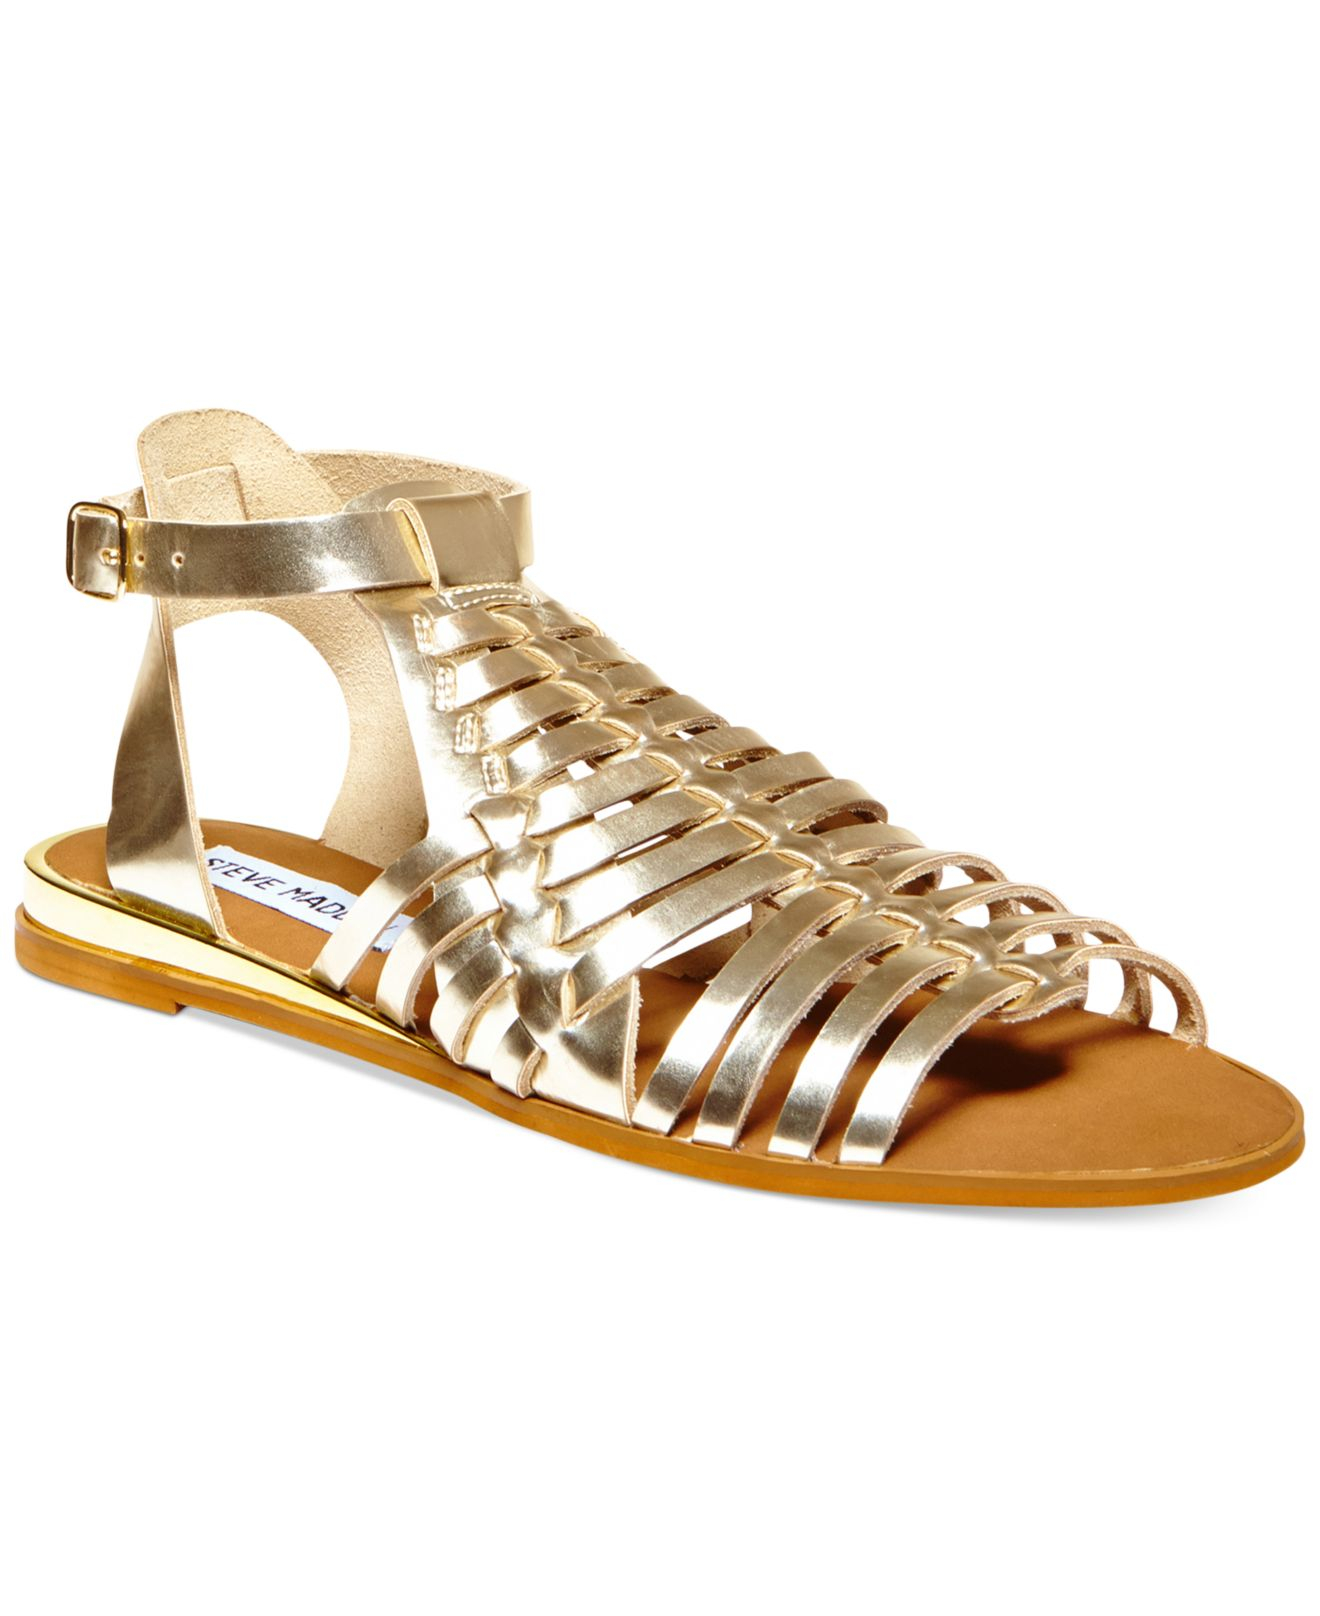 Steve madden Women's Comely Flat Gladiator Sandals in Metallic | Lyst